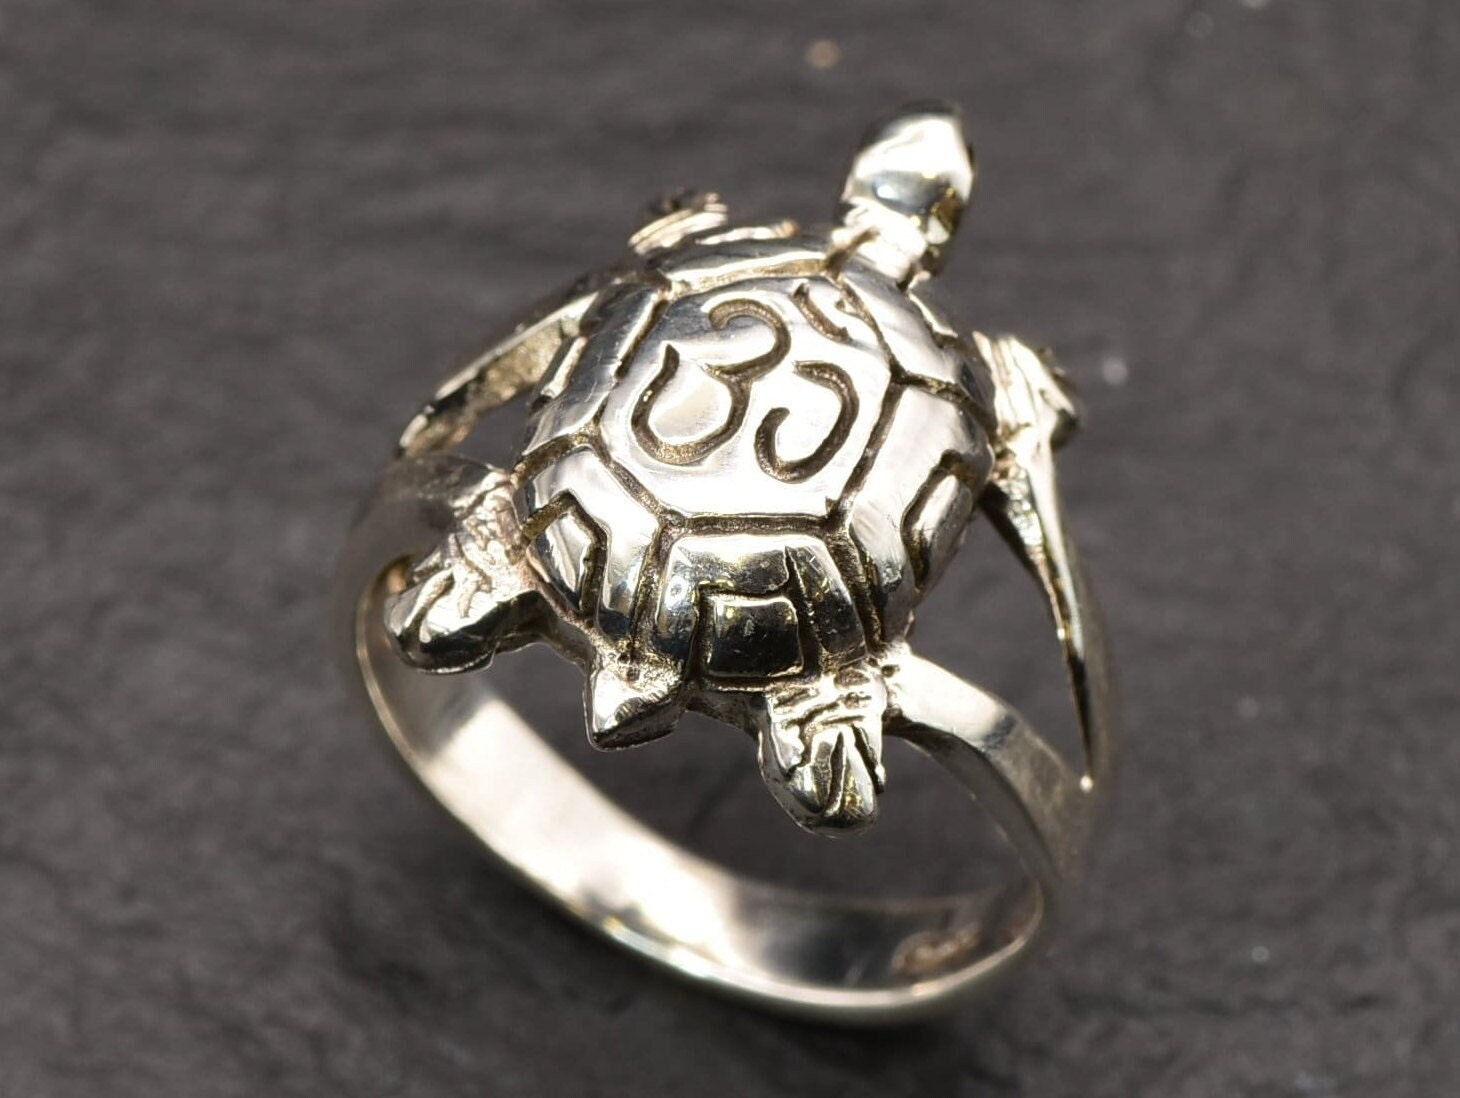 Buy Tortoise Ring Online In India - Etsy India